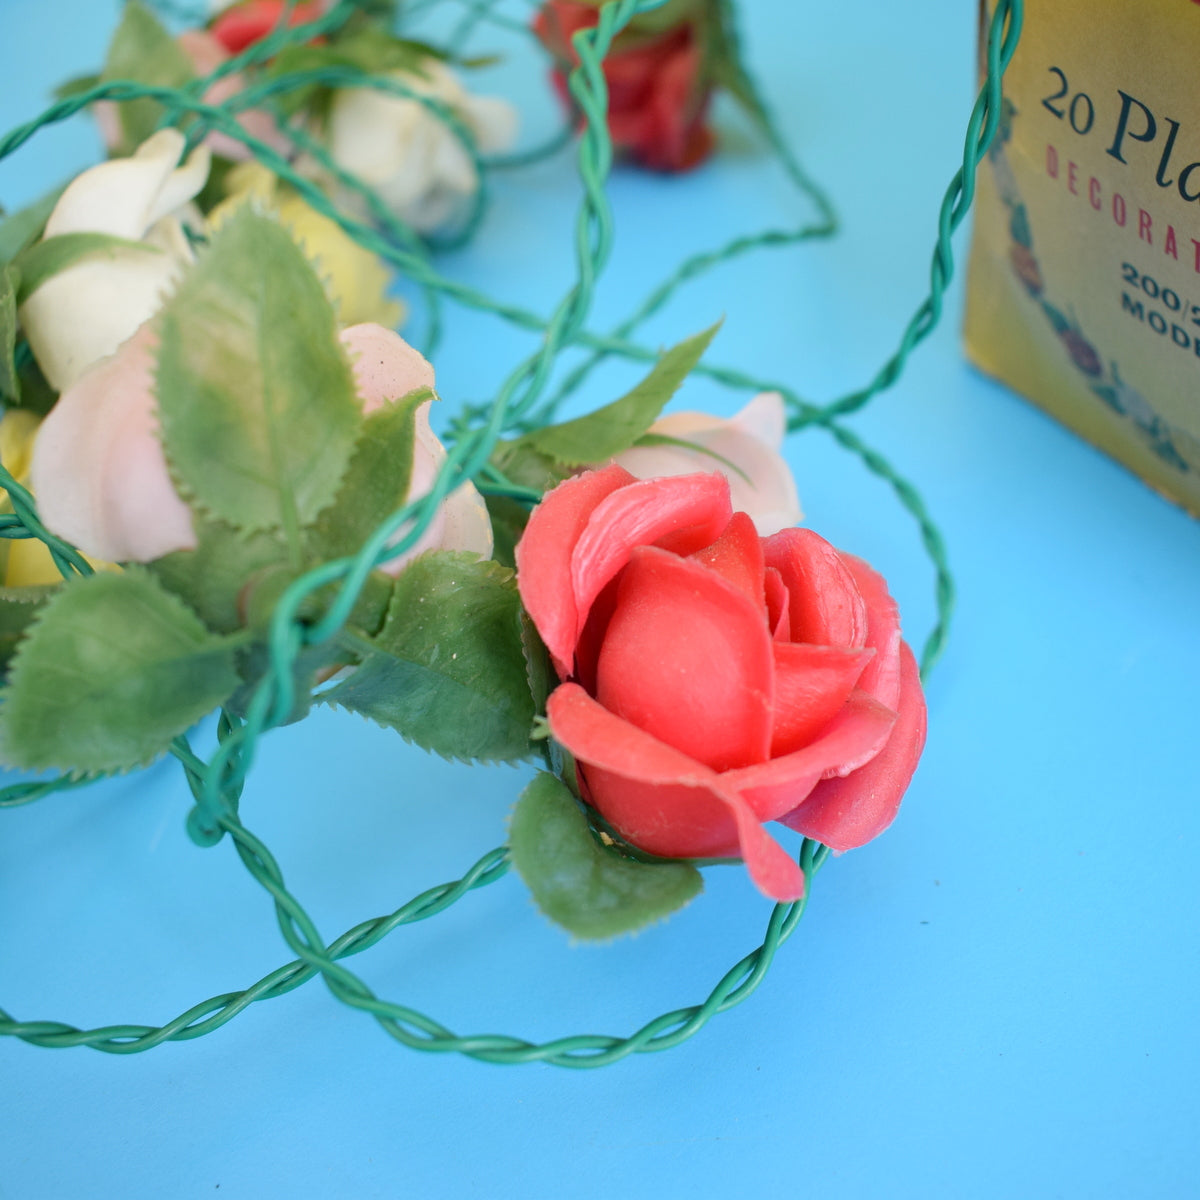 Vintage 1950s Dazlite Plastic Rose String Lights - Boxed - Decorative